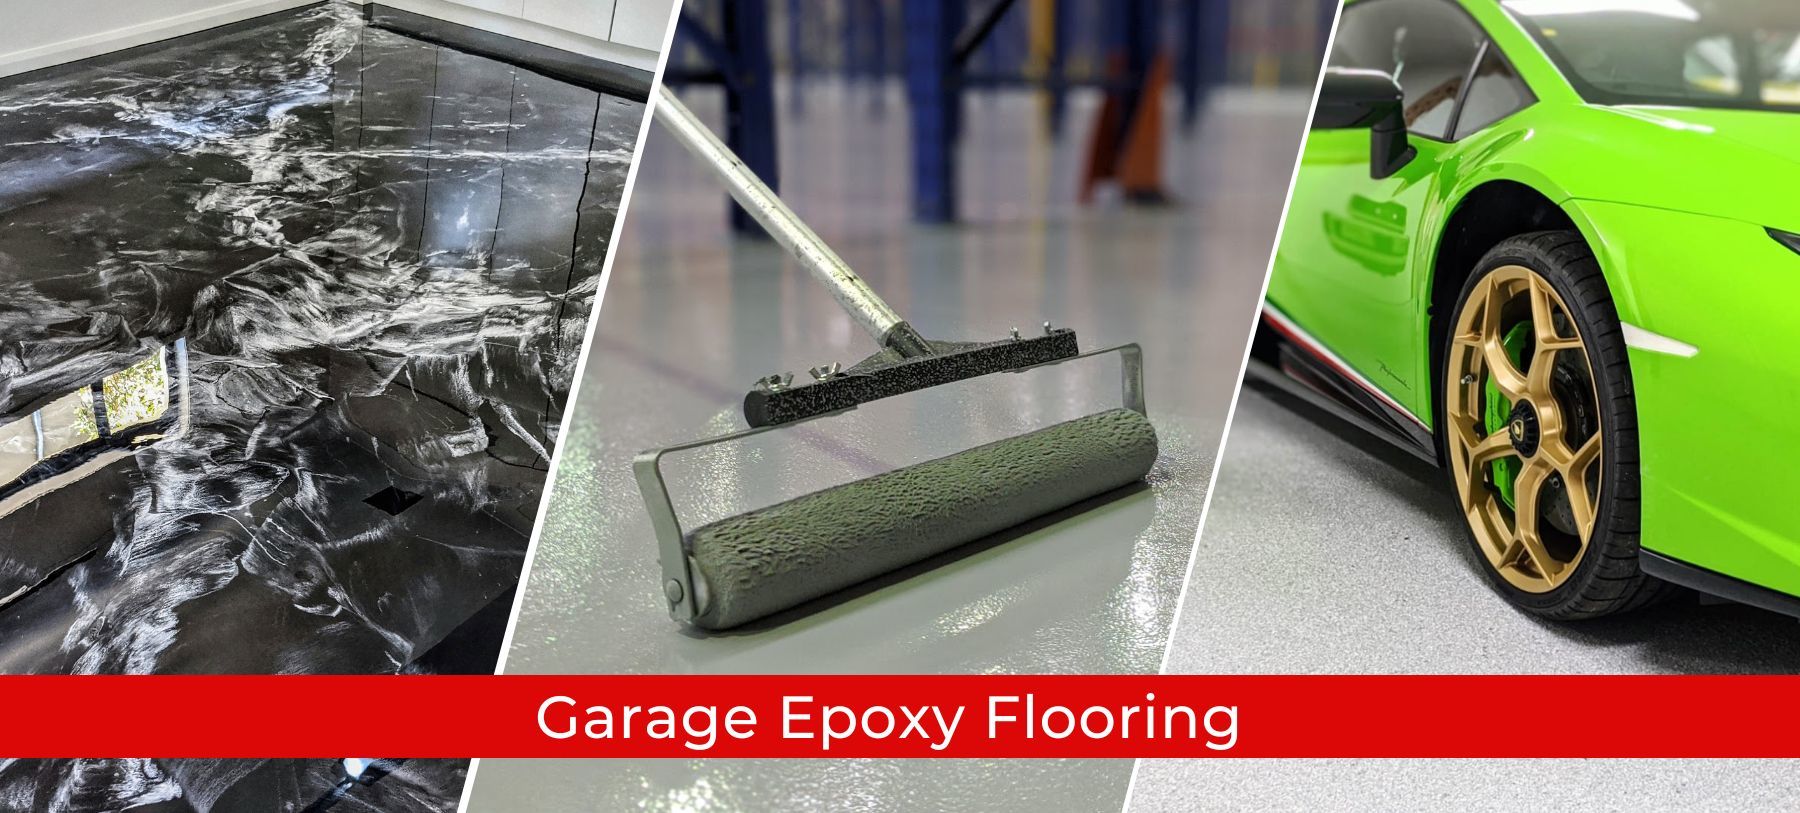 Epoxy Flooring For Garages